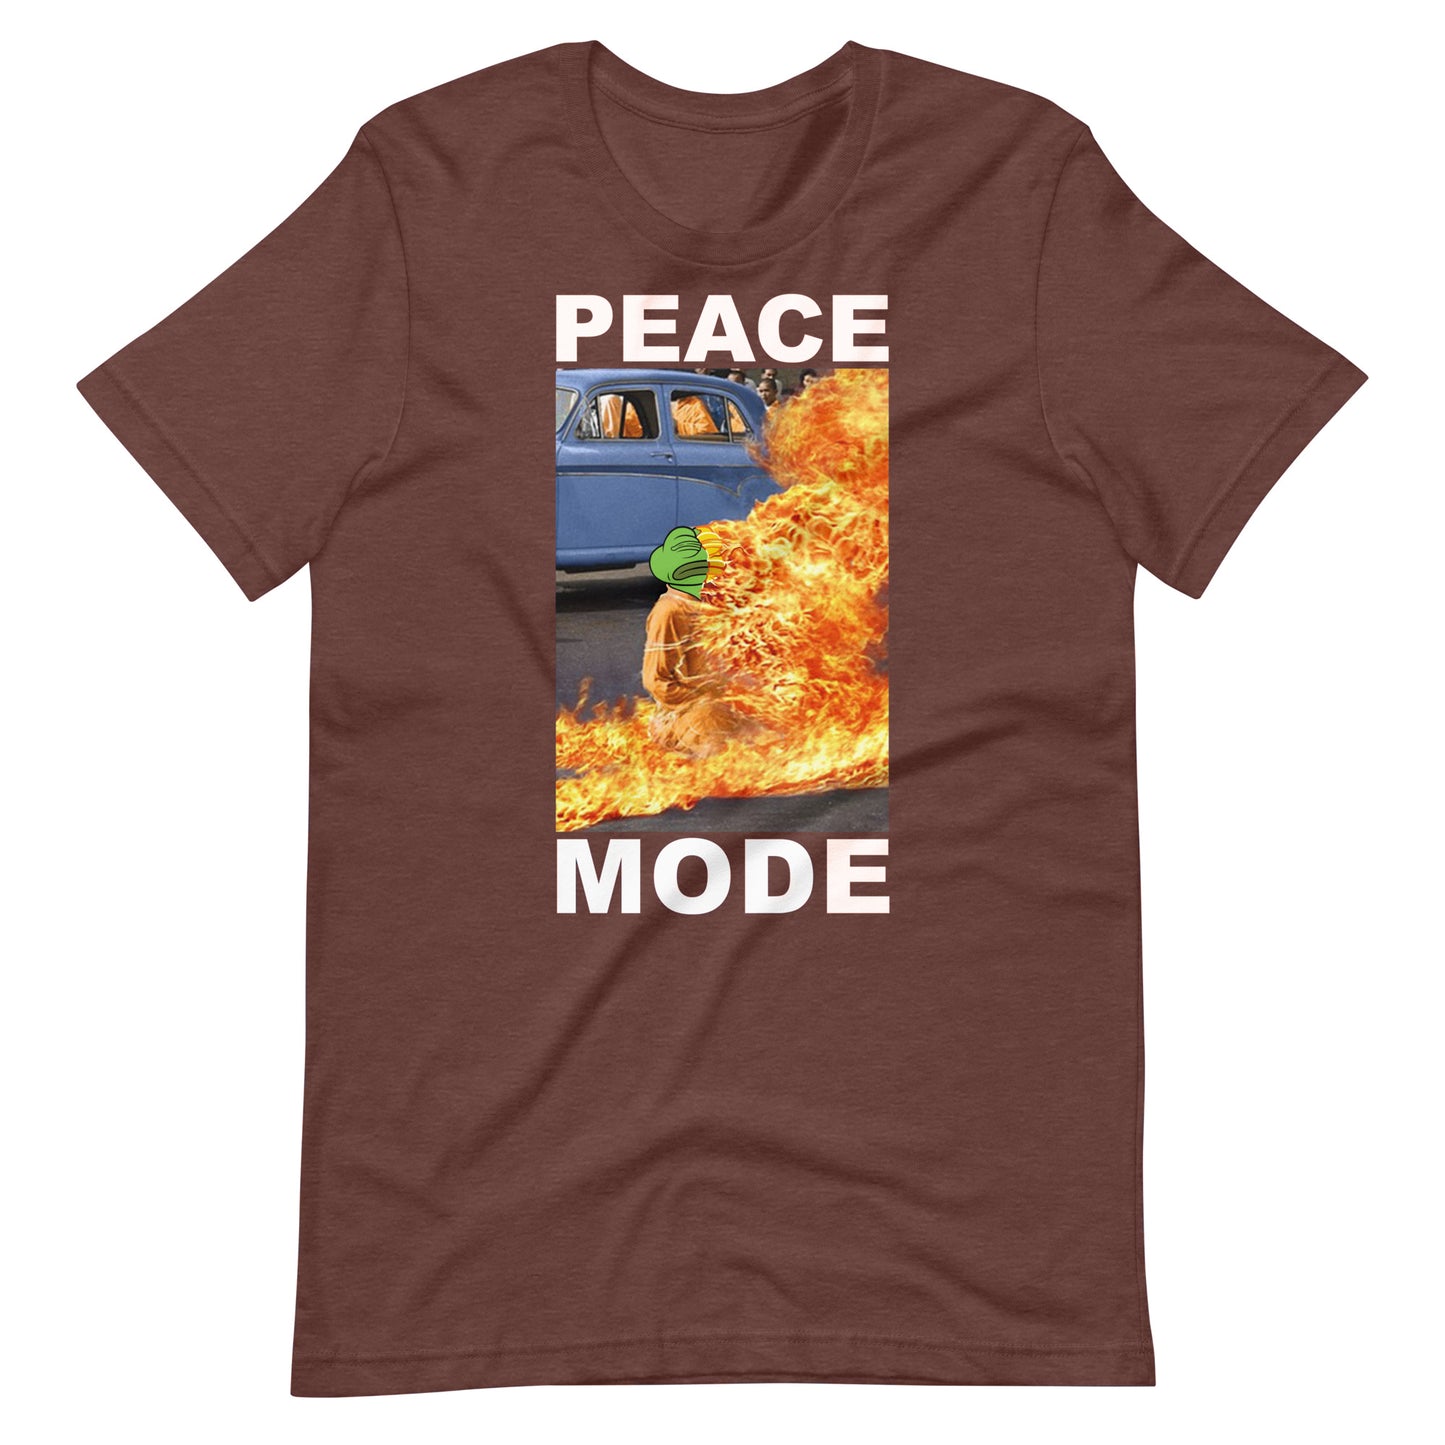 Immolation Monk Unisex T-Shirt